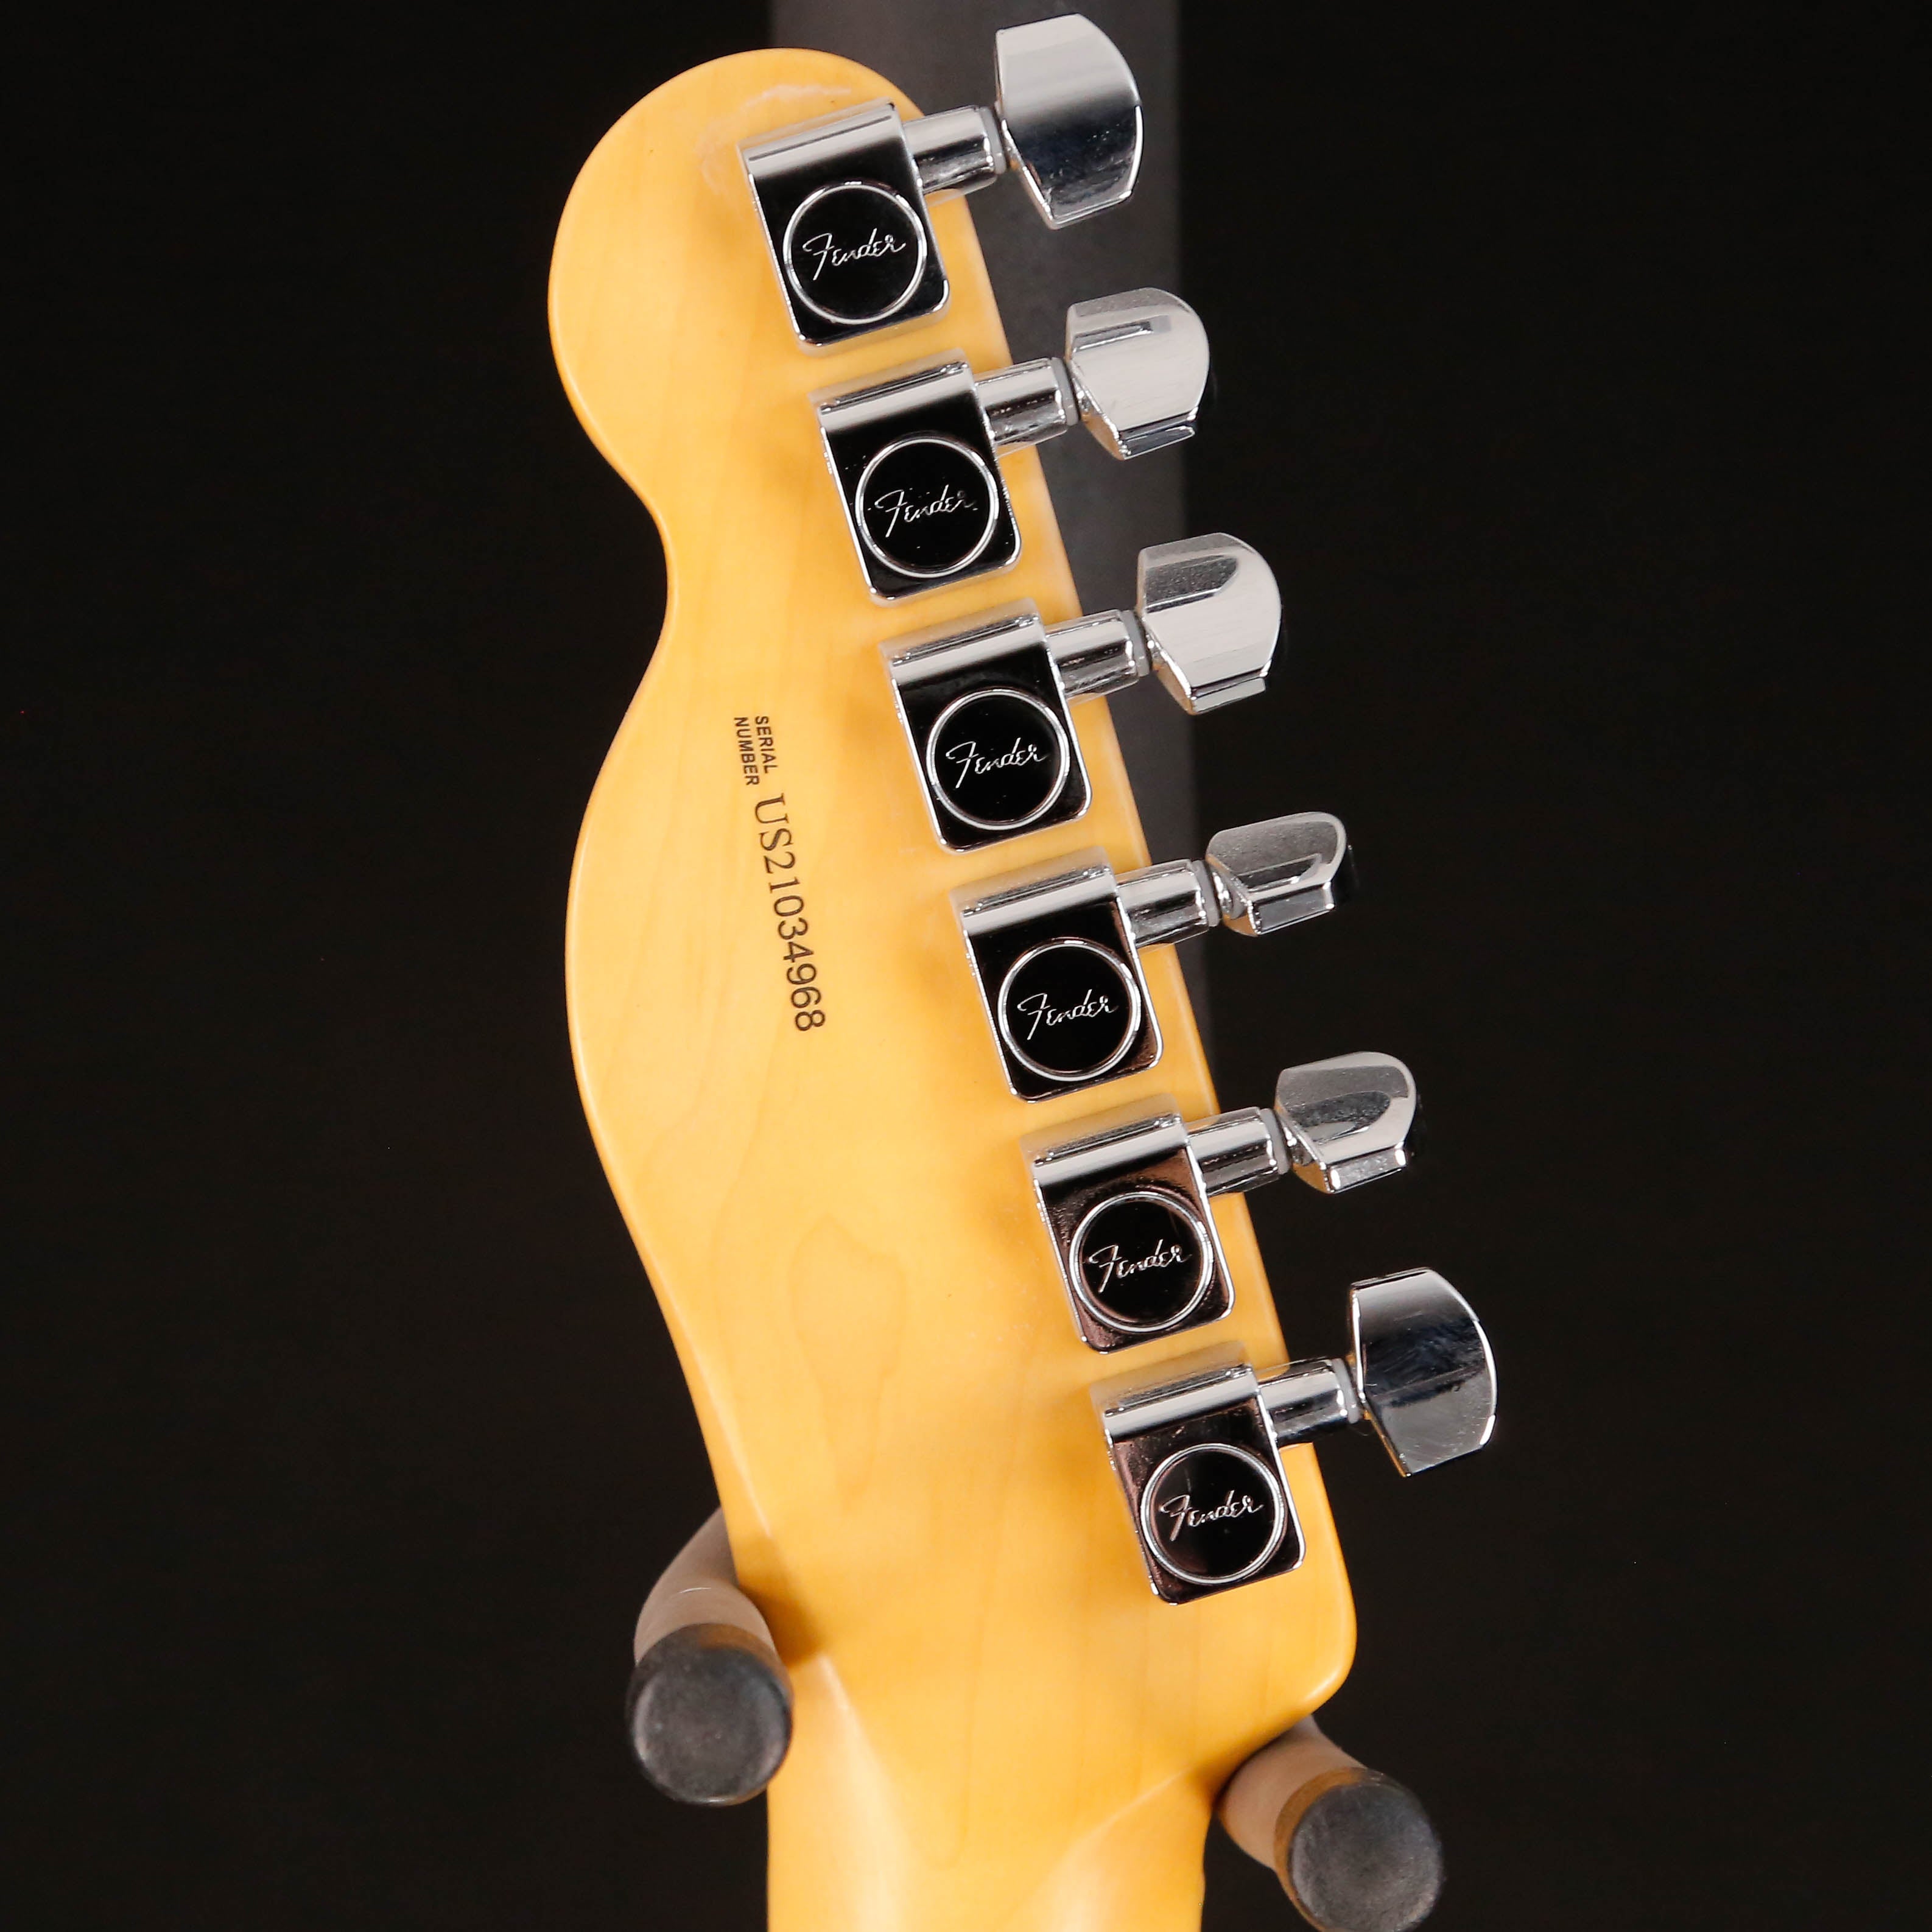 Fender American Professional II Telecaster, Maple Fb, BS Blonde